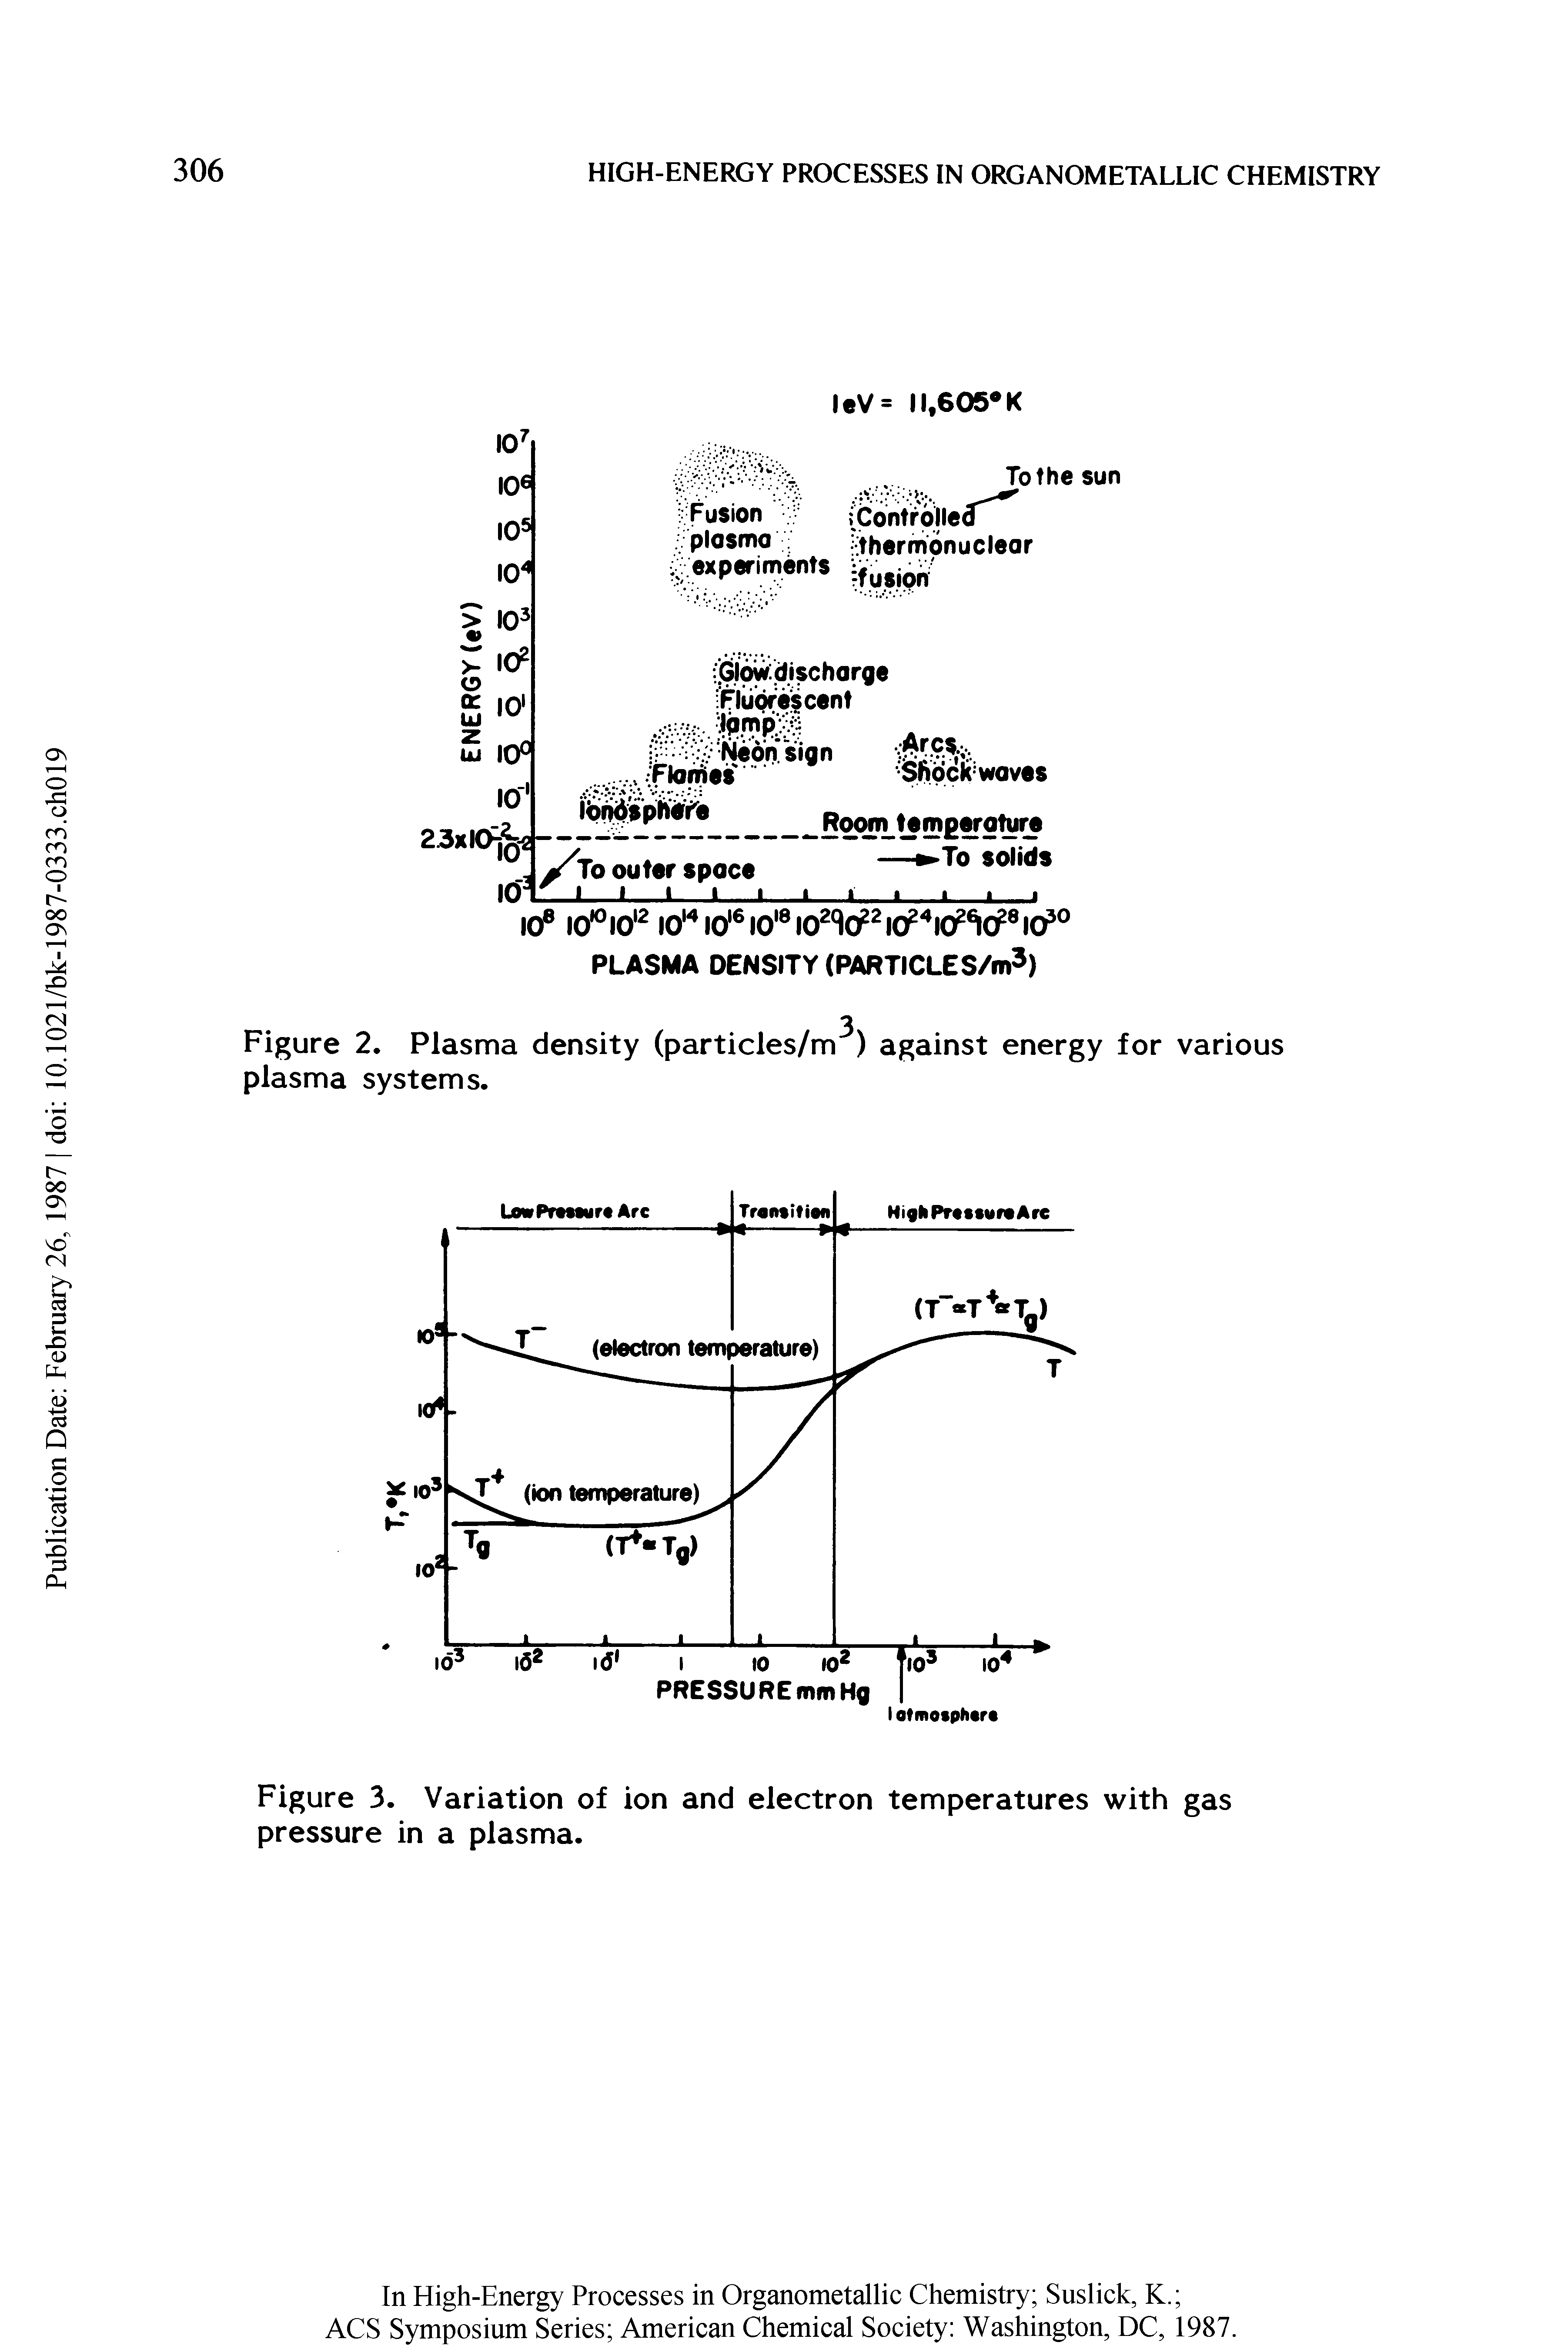 Figure 2. Plasma density (particles/m ) against energy for various plasma systems.